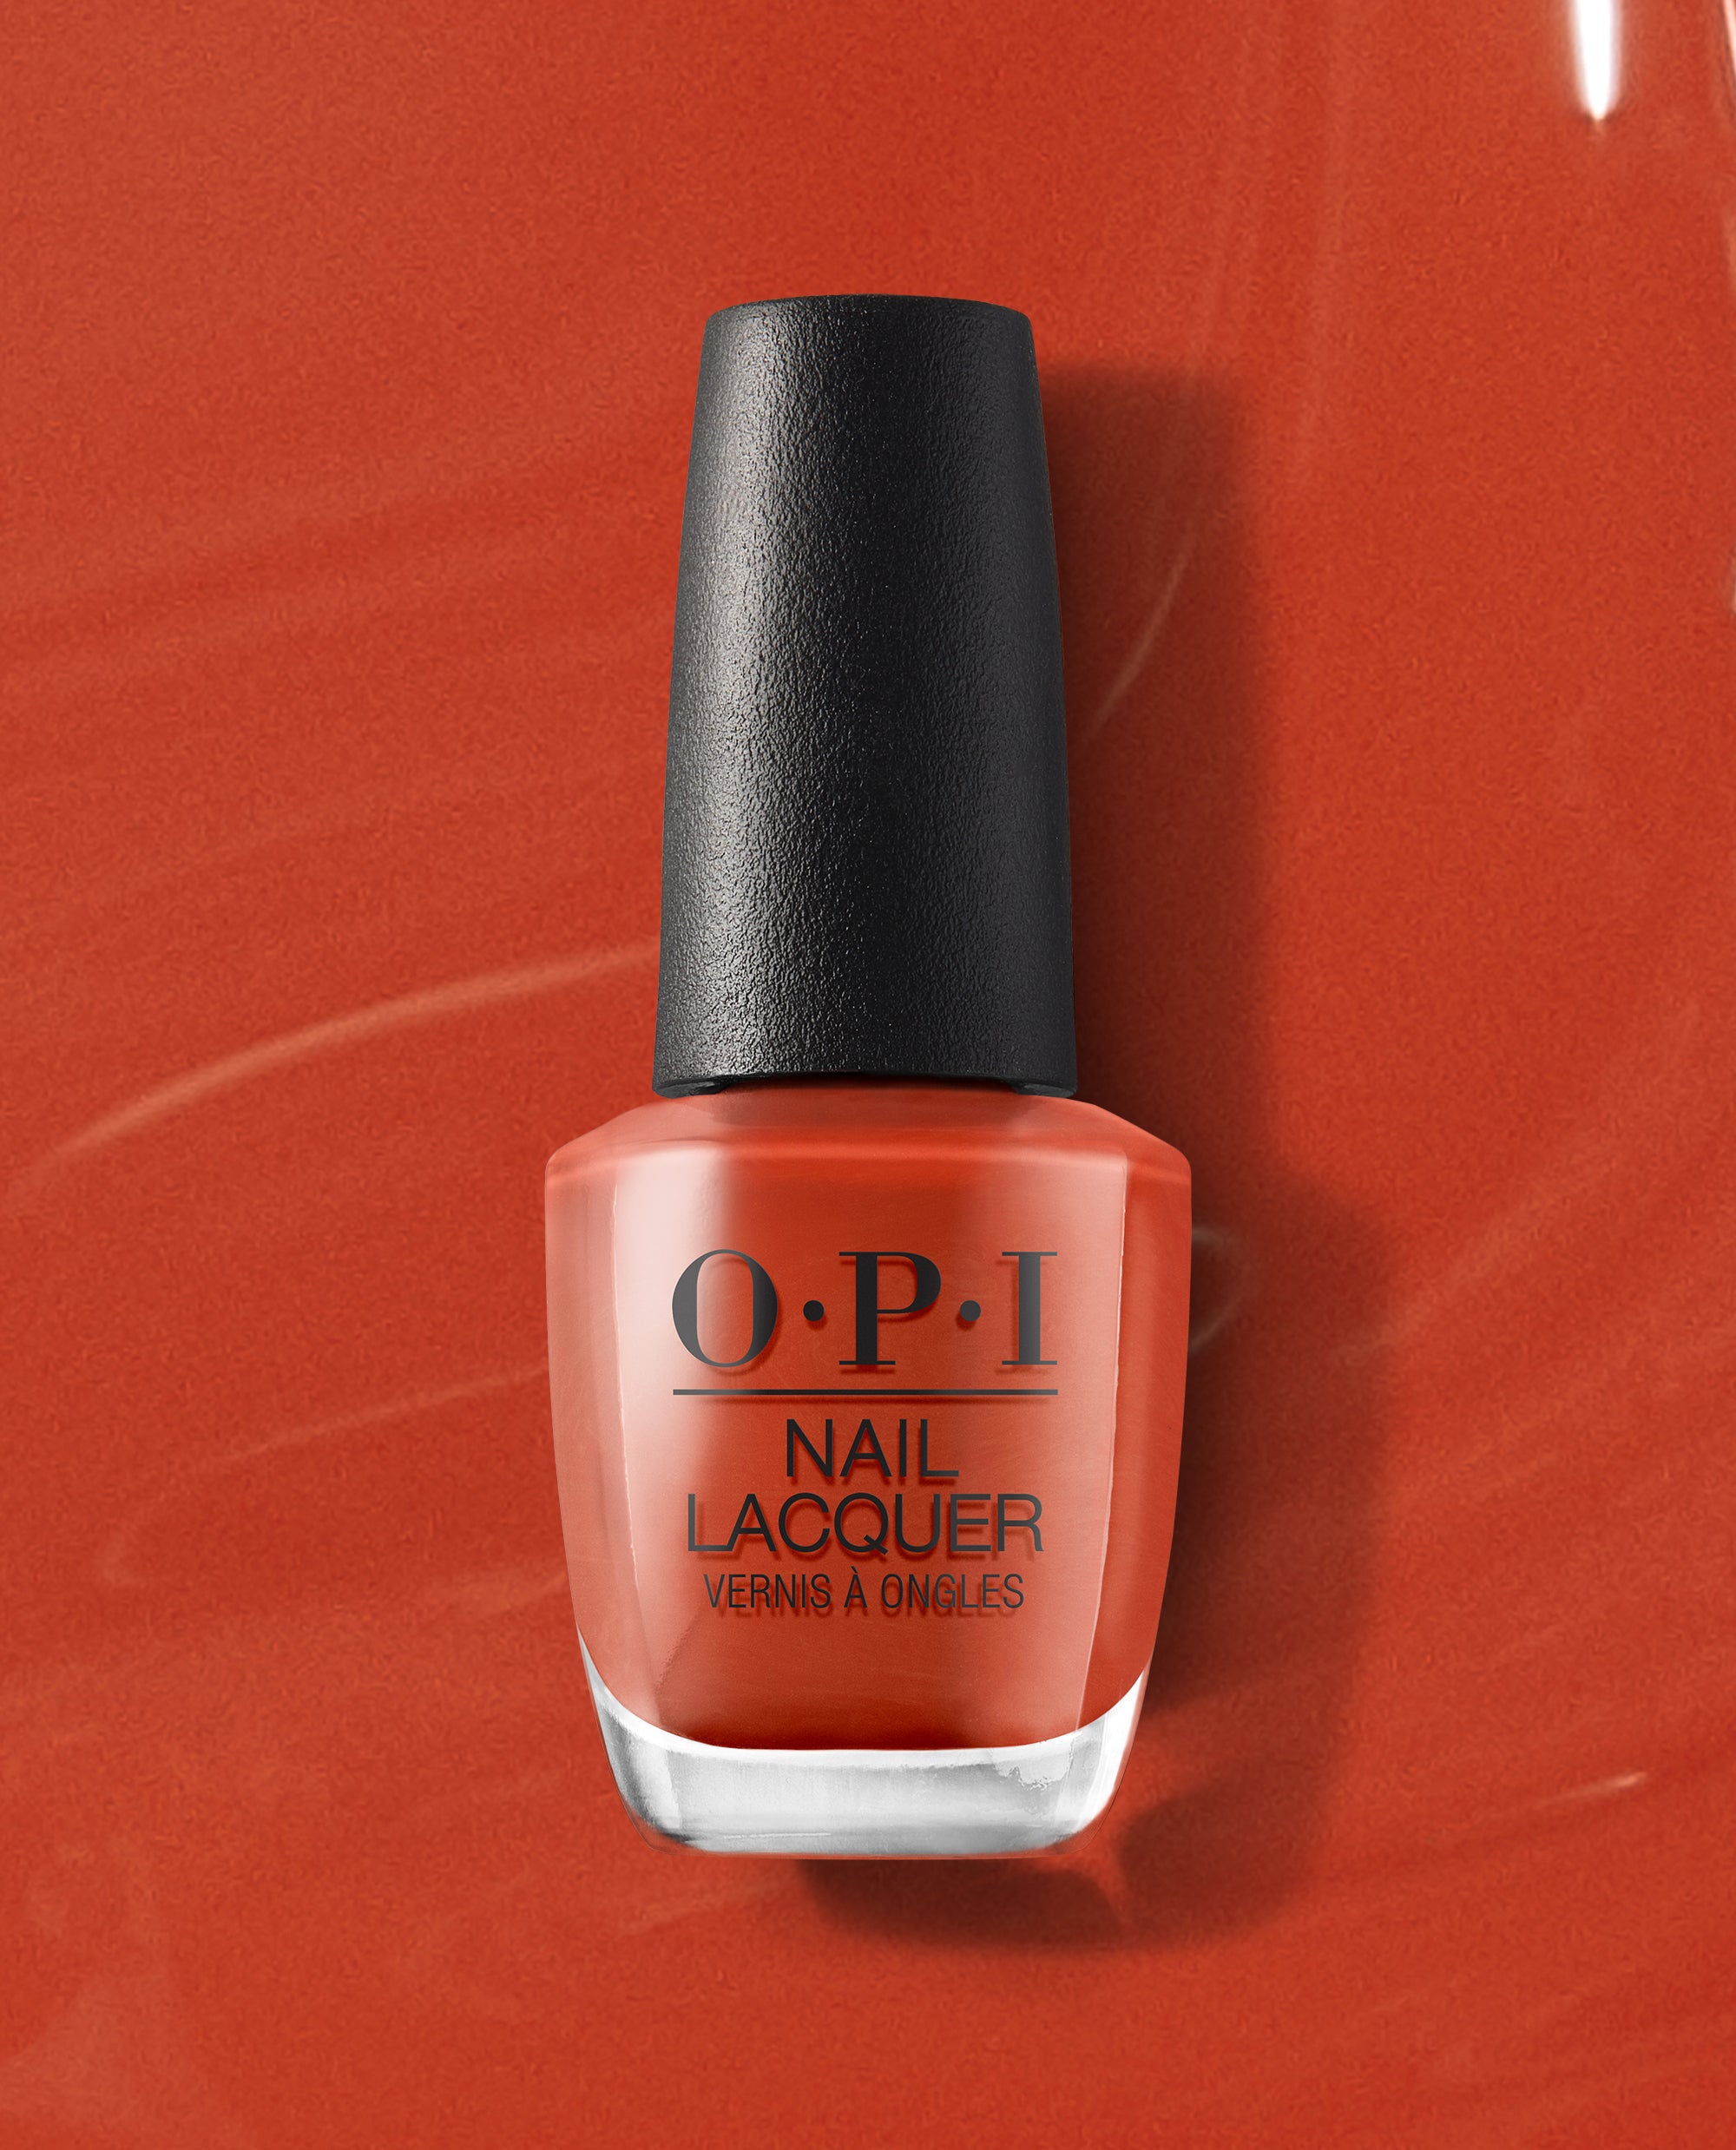 OPI Nail Lacquer Spring NLD54 Trading Paint 15ml - orange nail polish | eBay